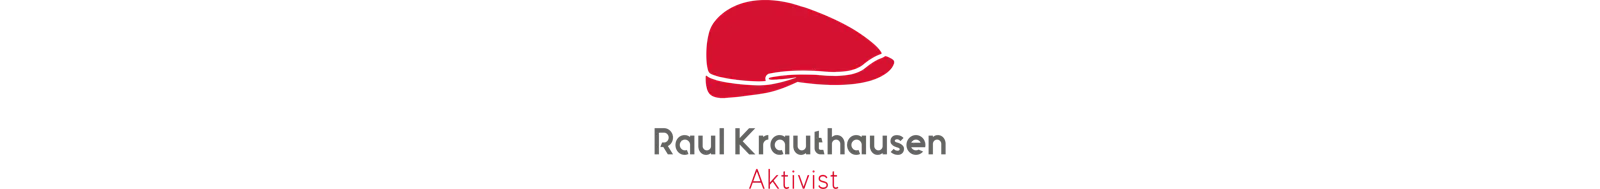 Raul Krauthausen
Aktivist